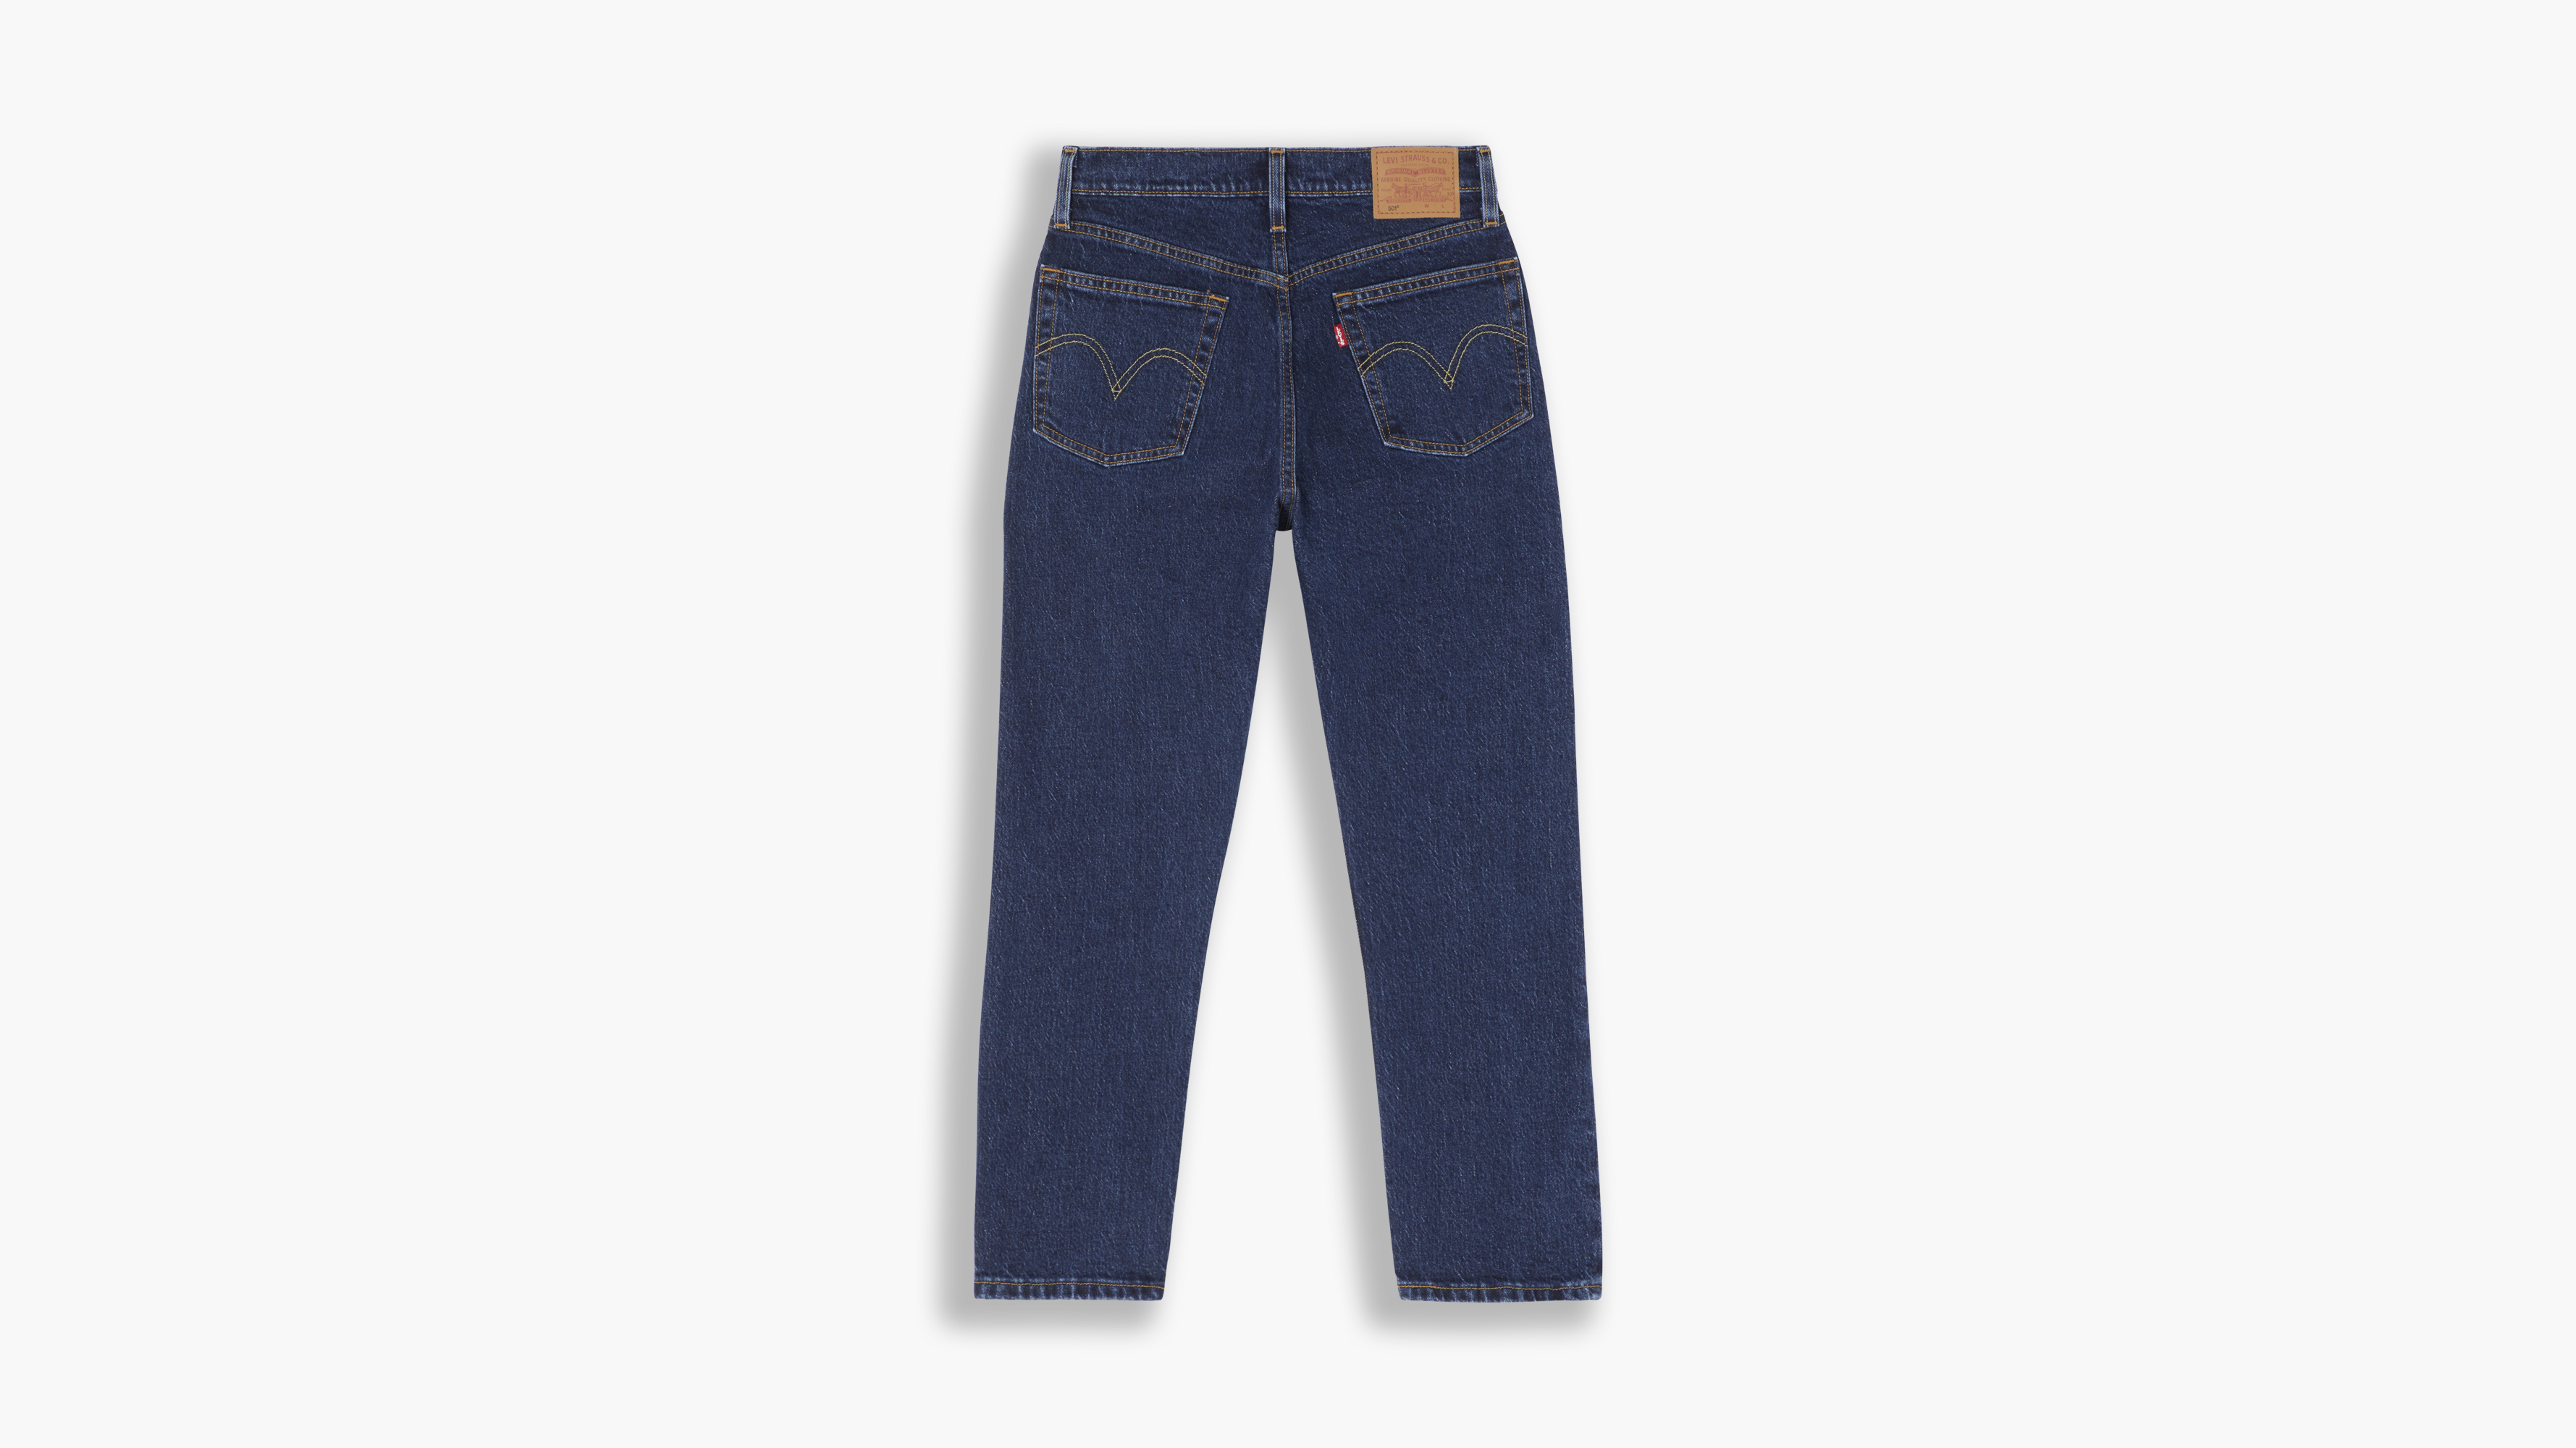 Levi's 501 Original Crop jeans, salsa stonewash, 27/30